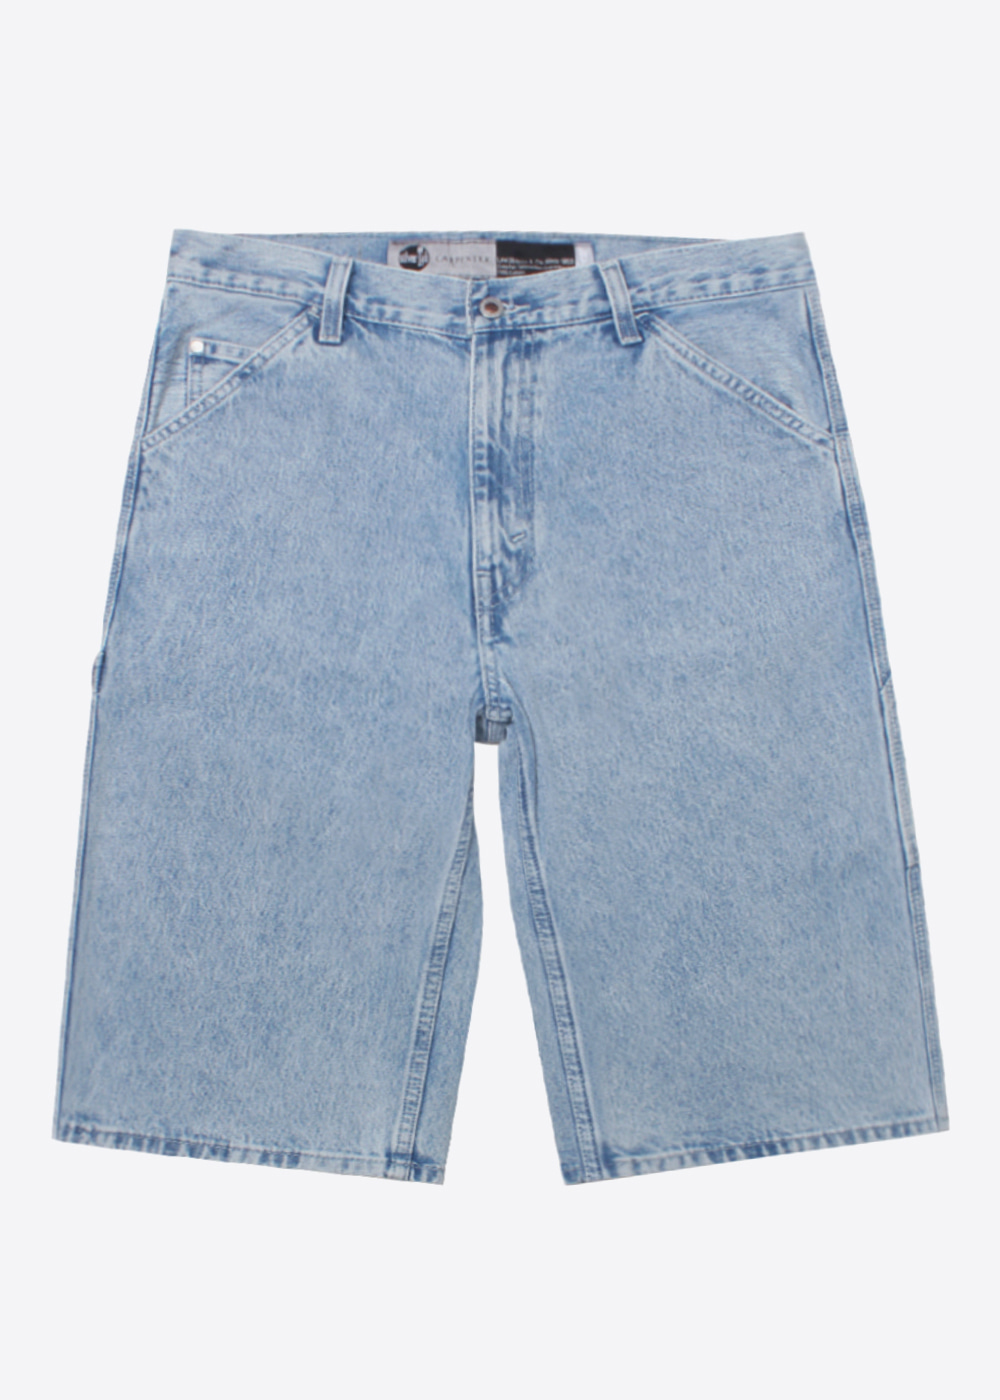 LEVI’S SILVER TAB’loose fit’u.s.a vintage denim shorts